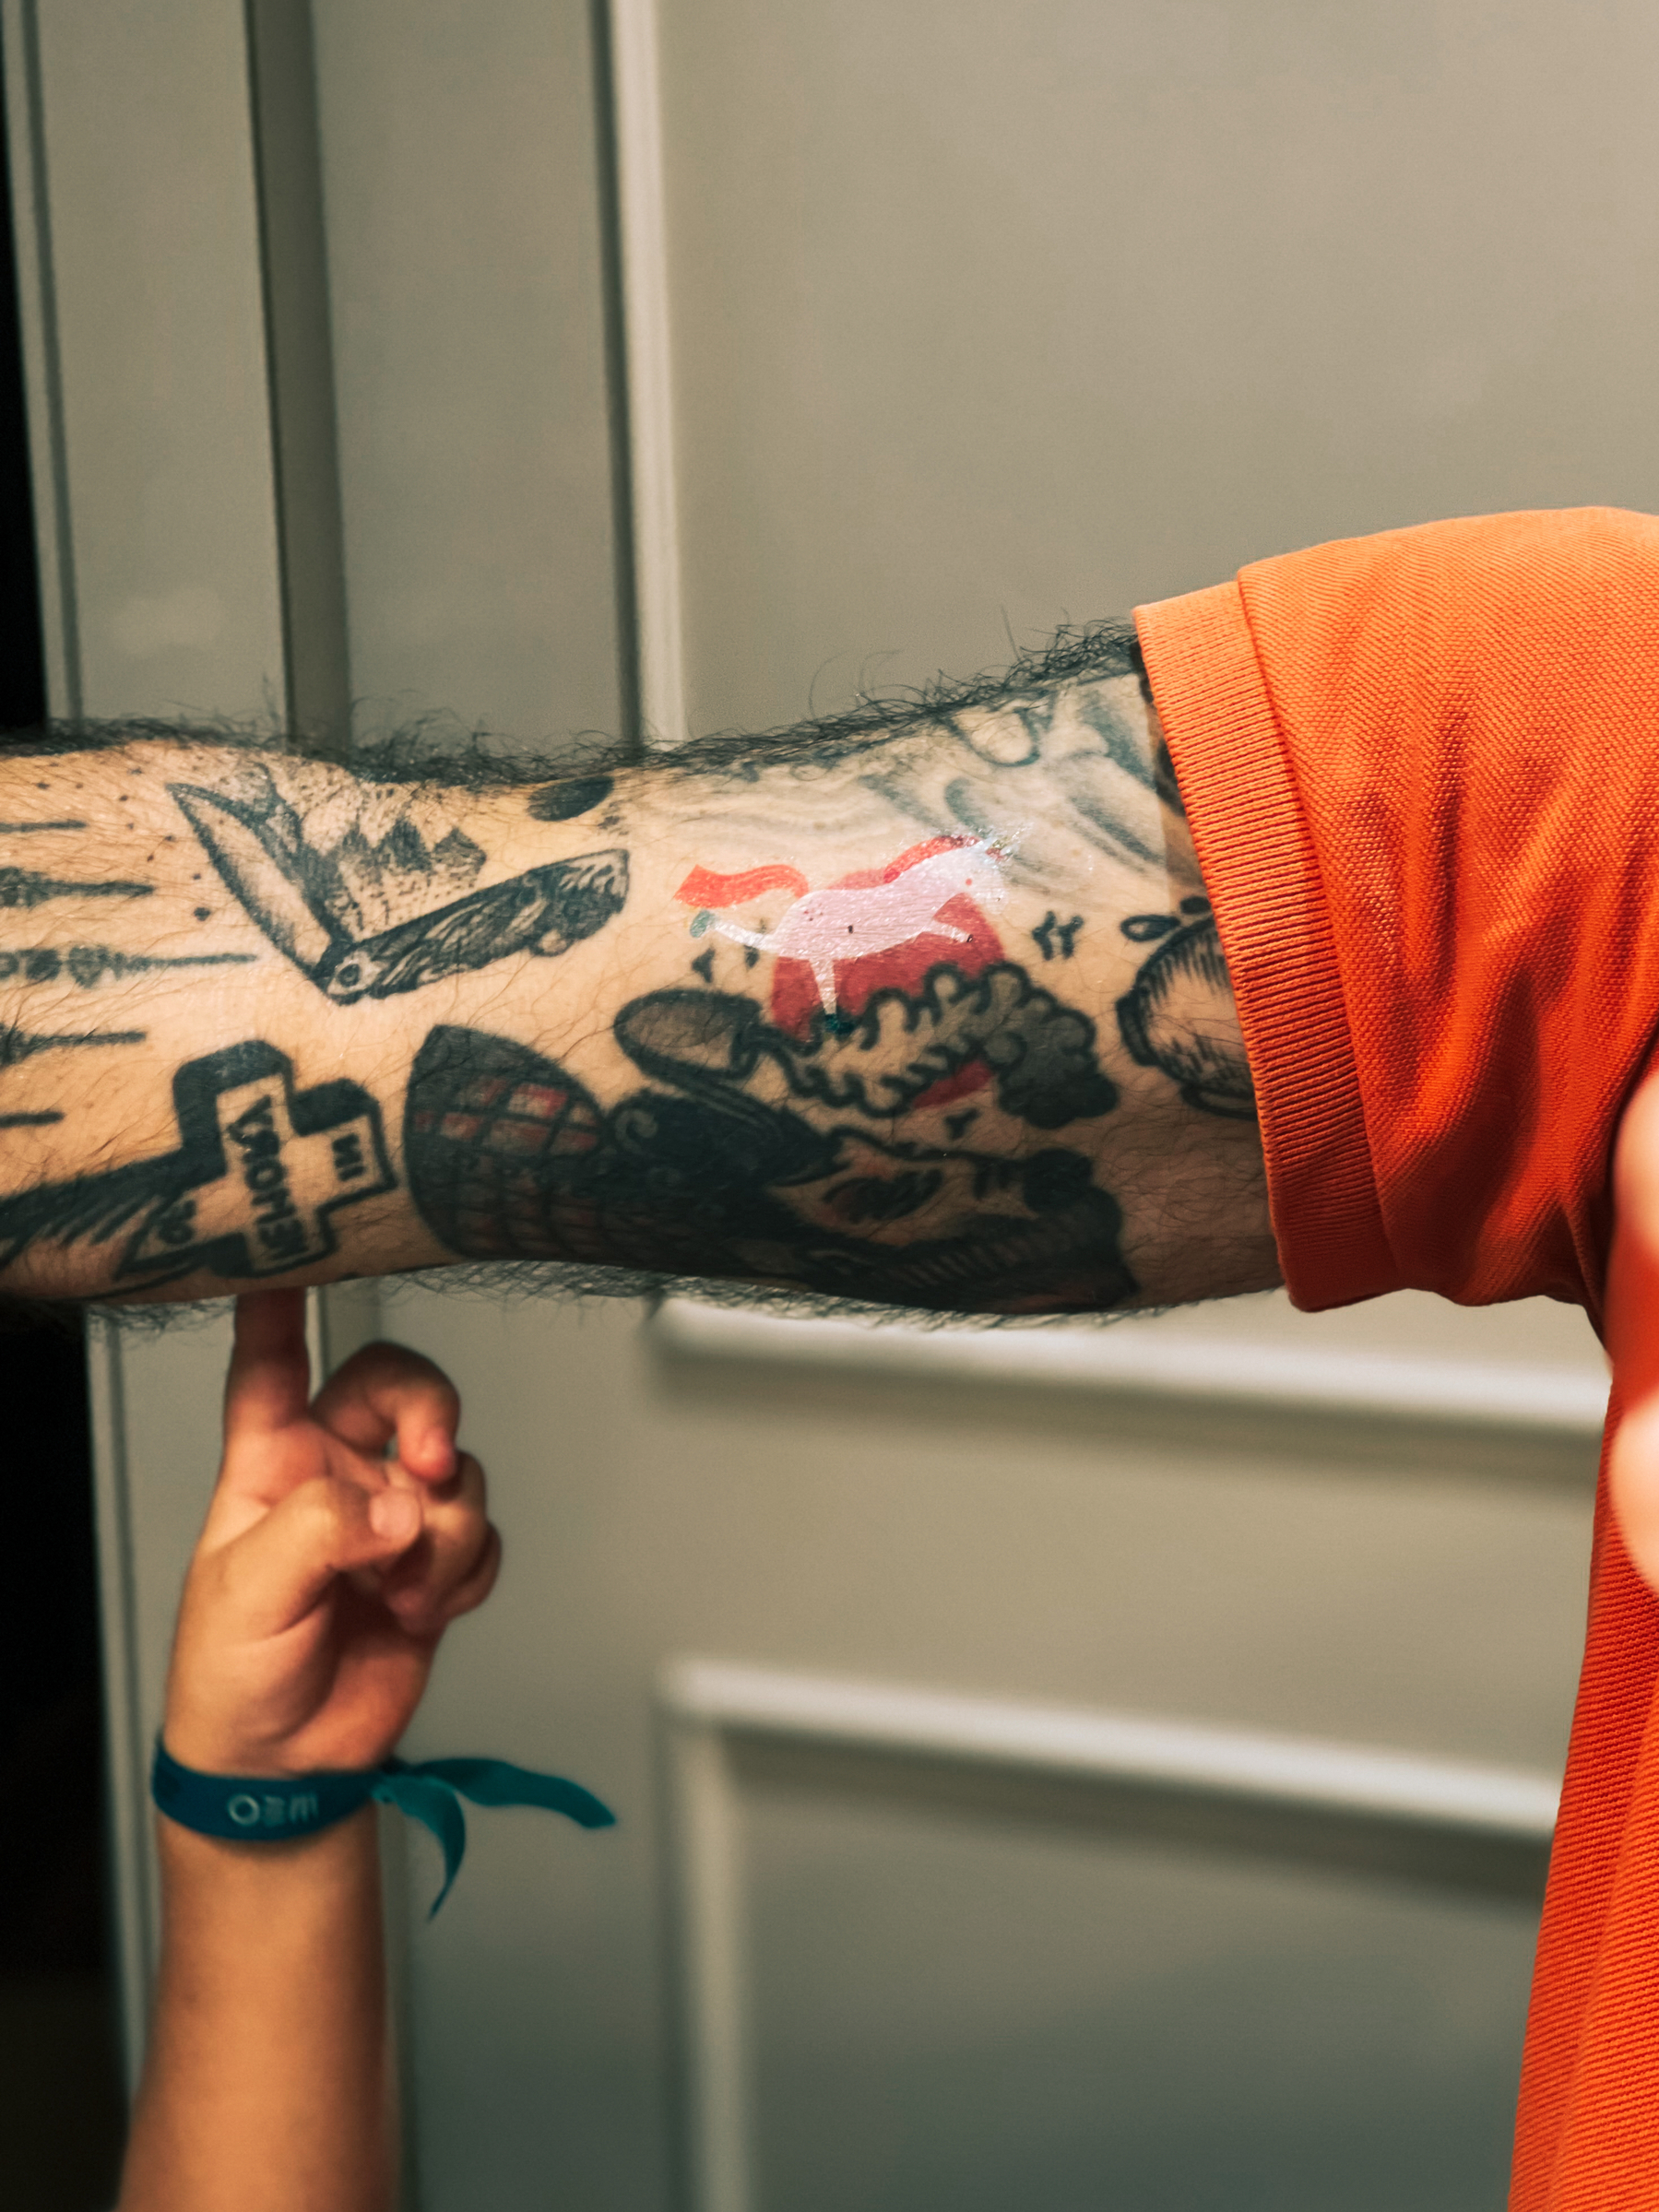 Tattooed arm with a fake unicorn tattoo. 